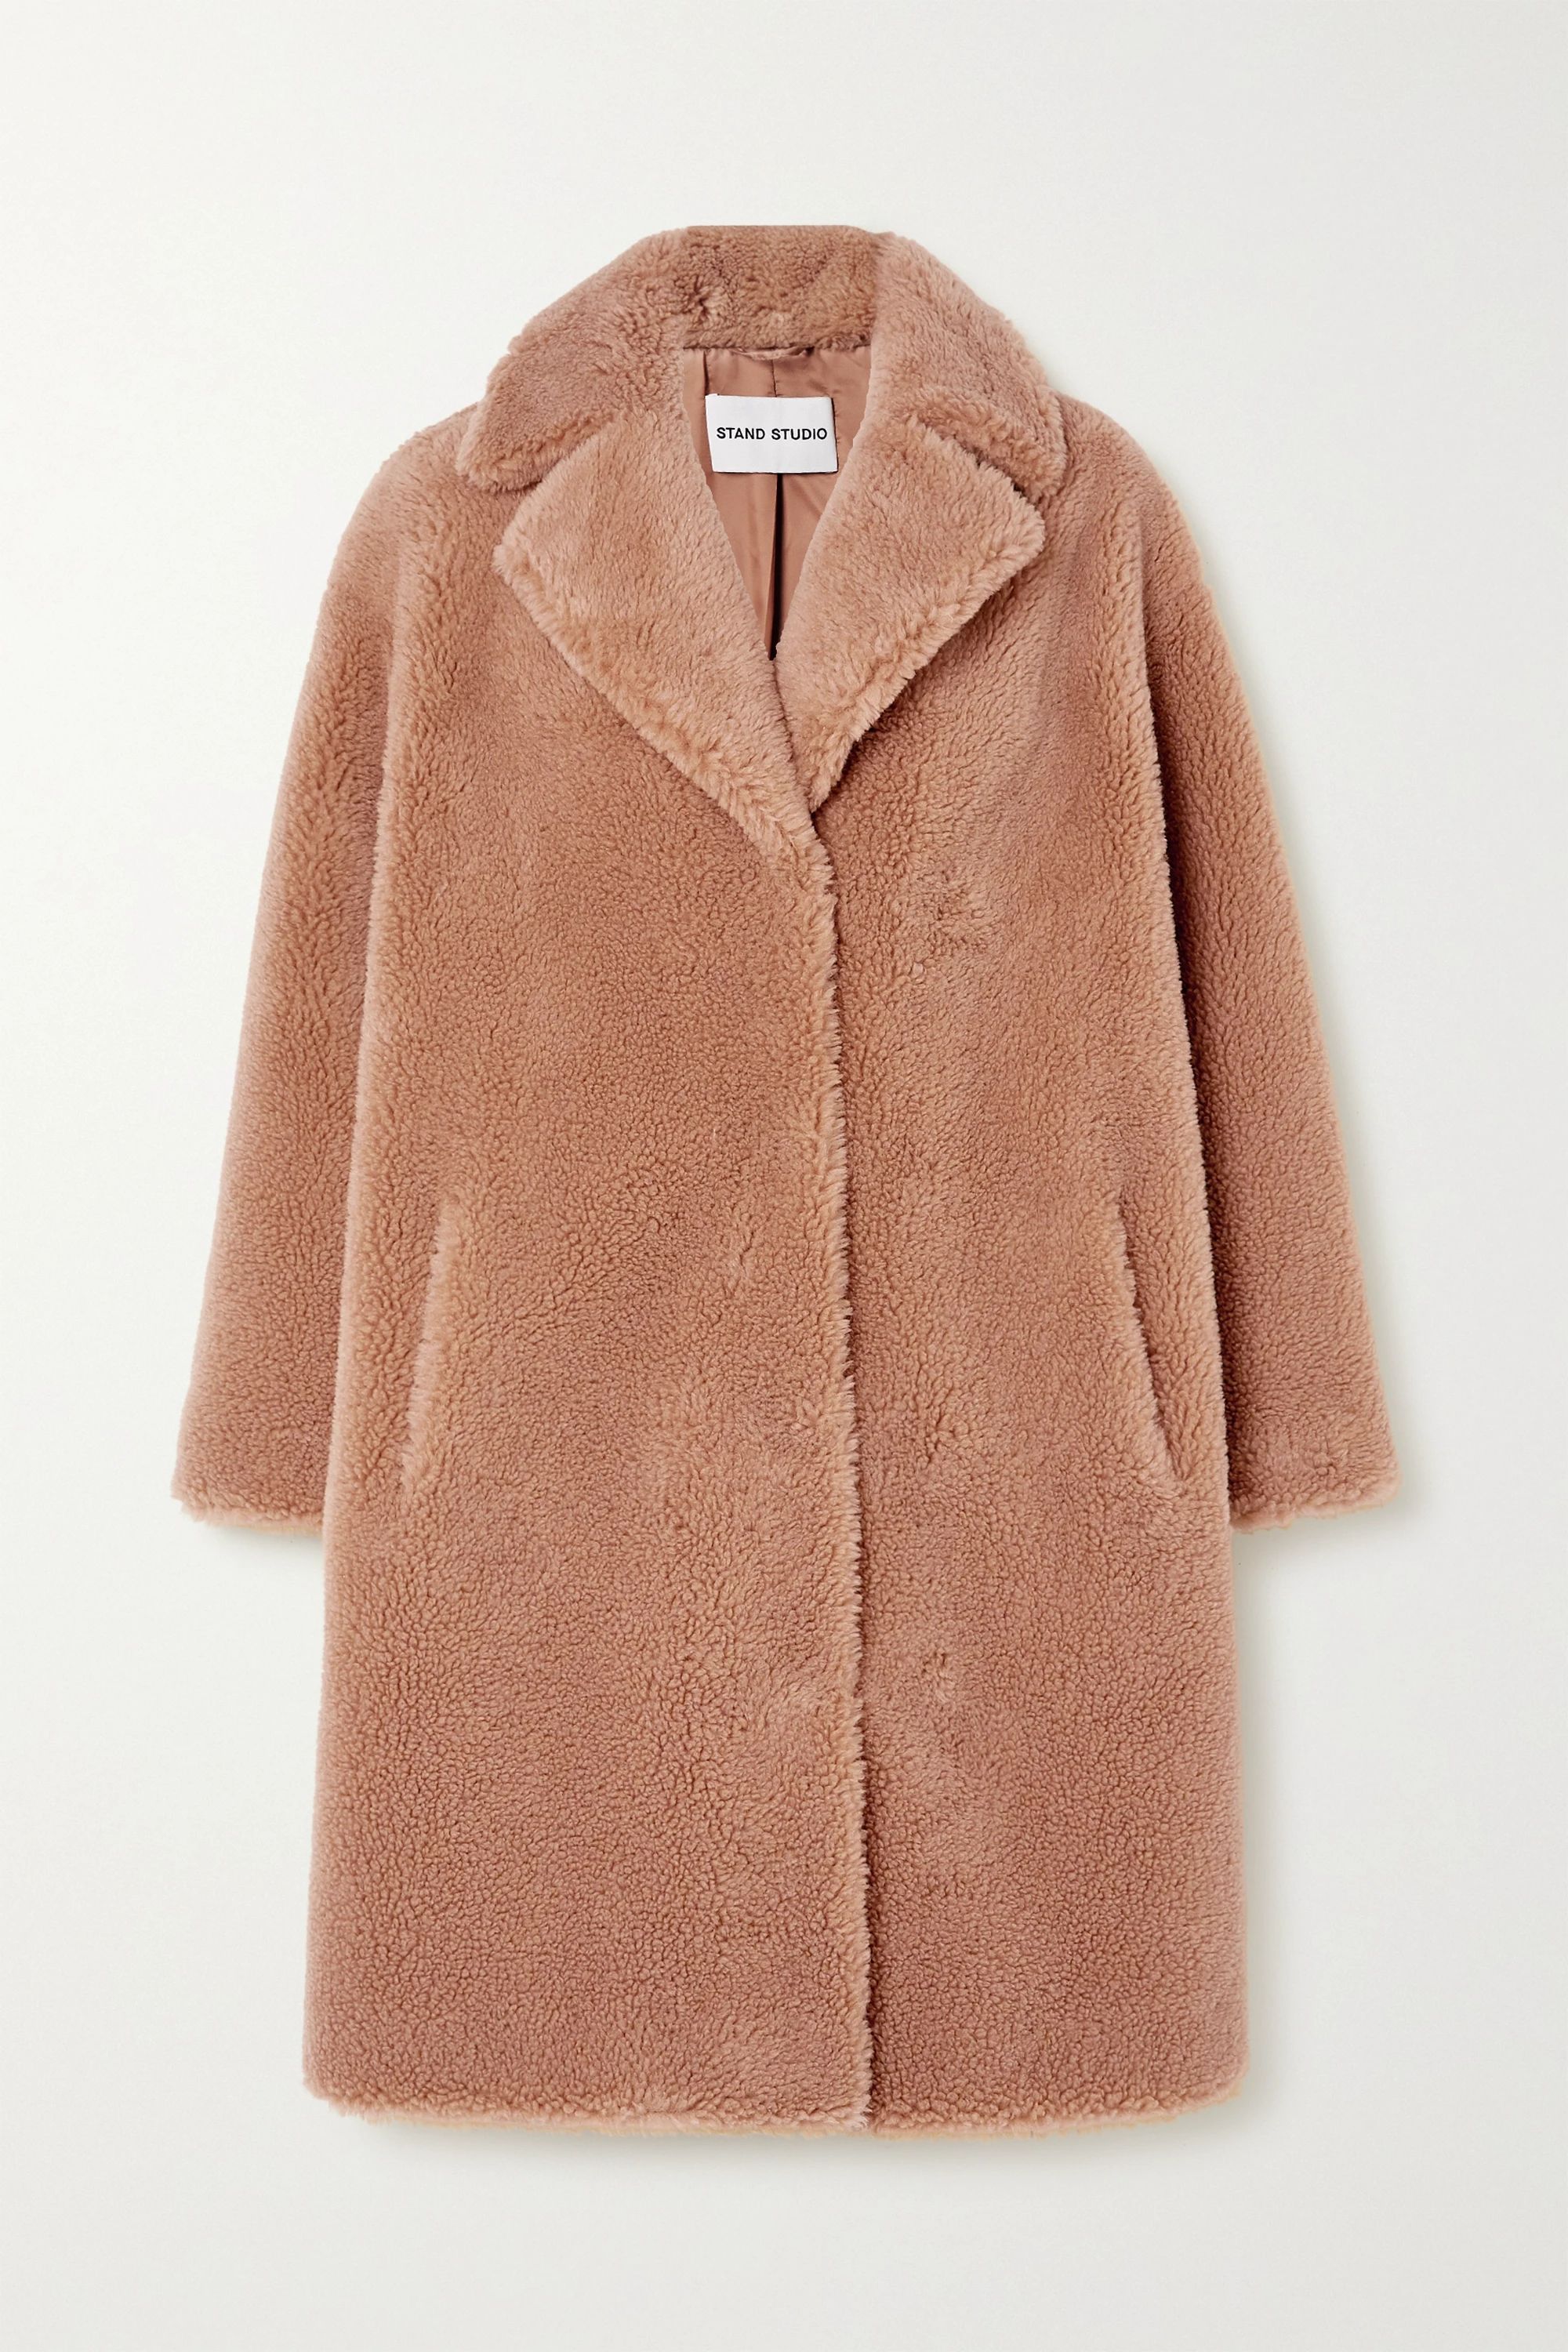 Beige Camille Cocoon faux shearling coat | Stand Studio | NET-A-PORTER | NET-A-PORTER (UK & EU)